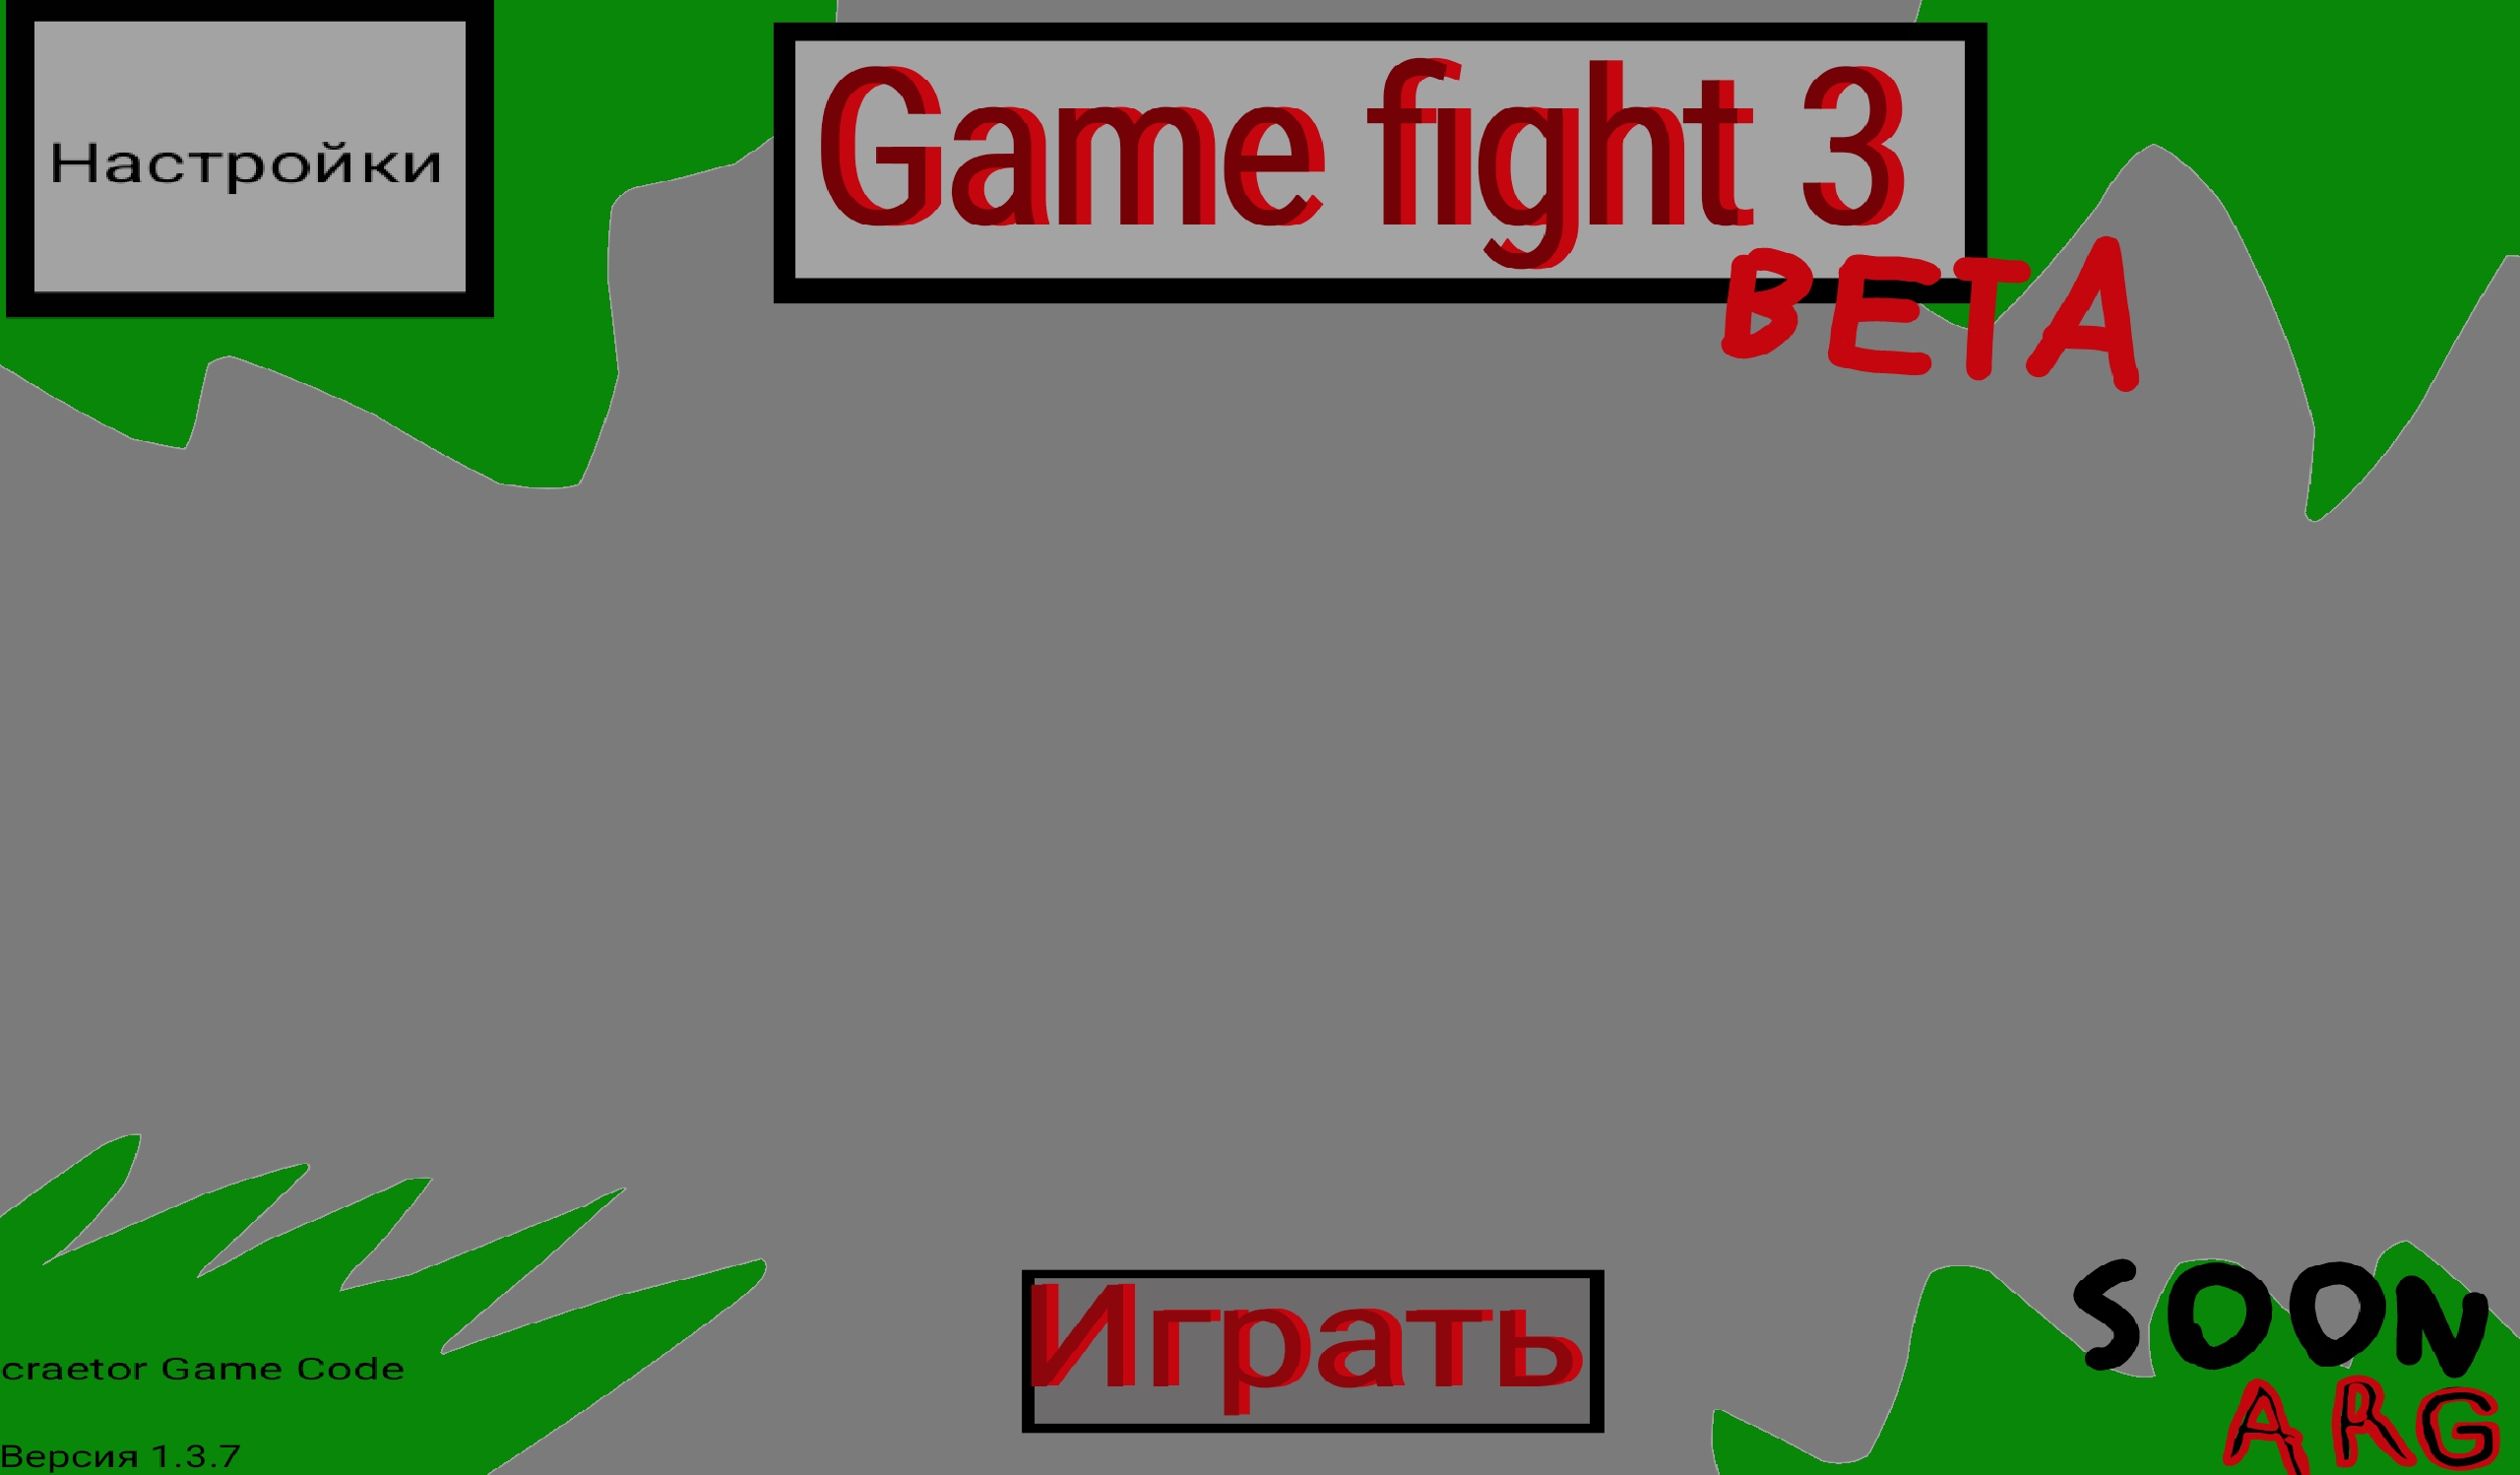 Game fight 3 beta